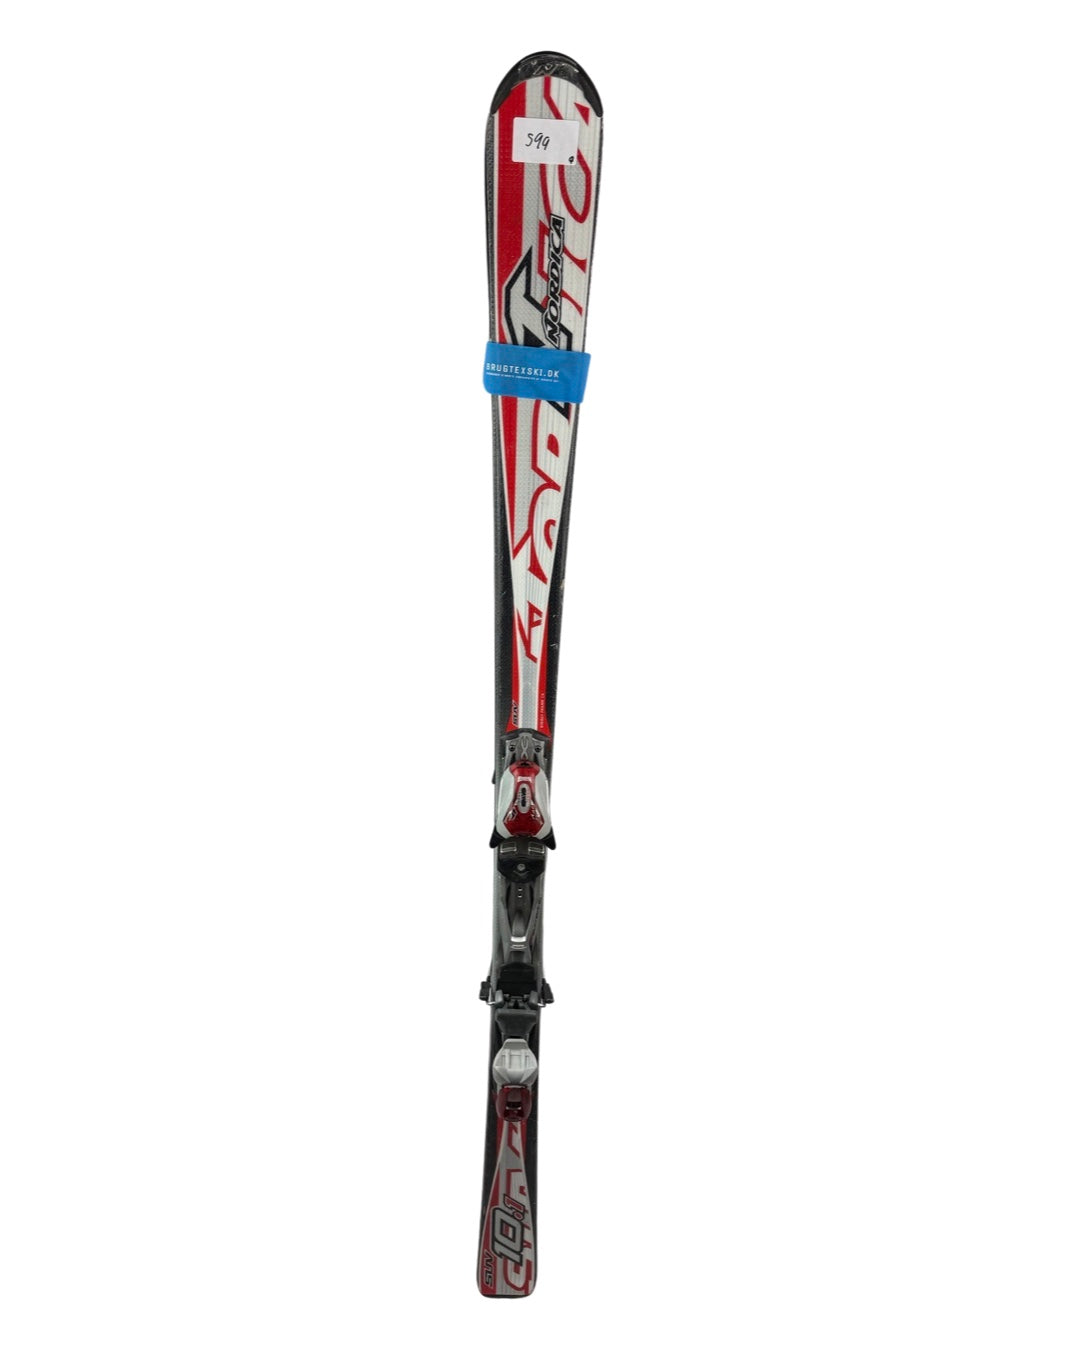 Voksen ski - blandet 599